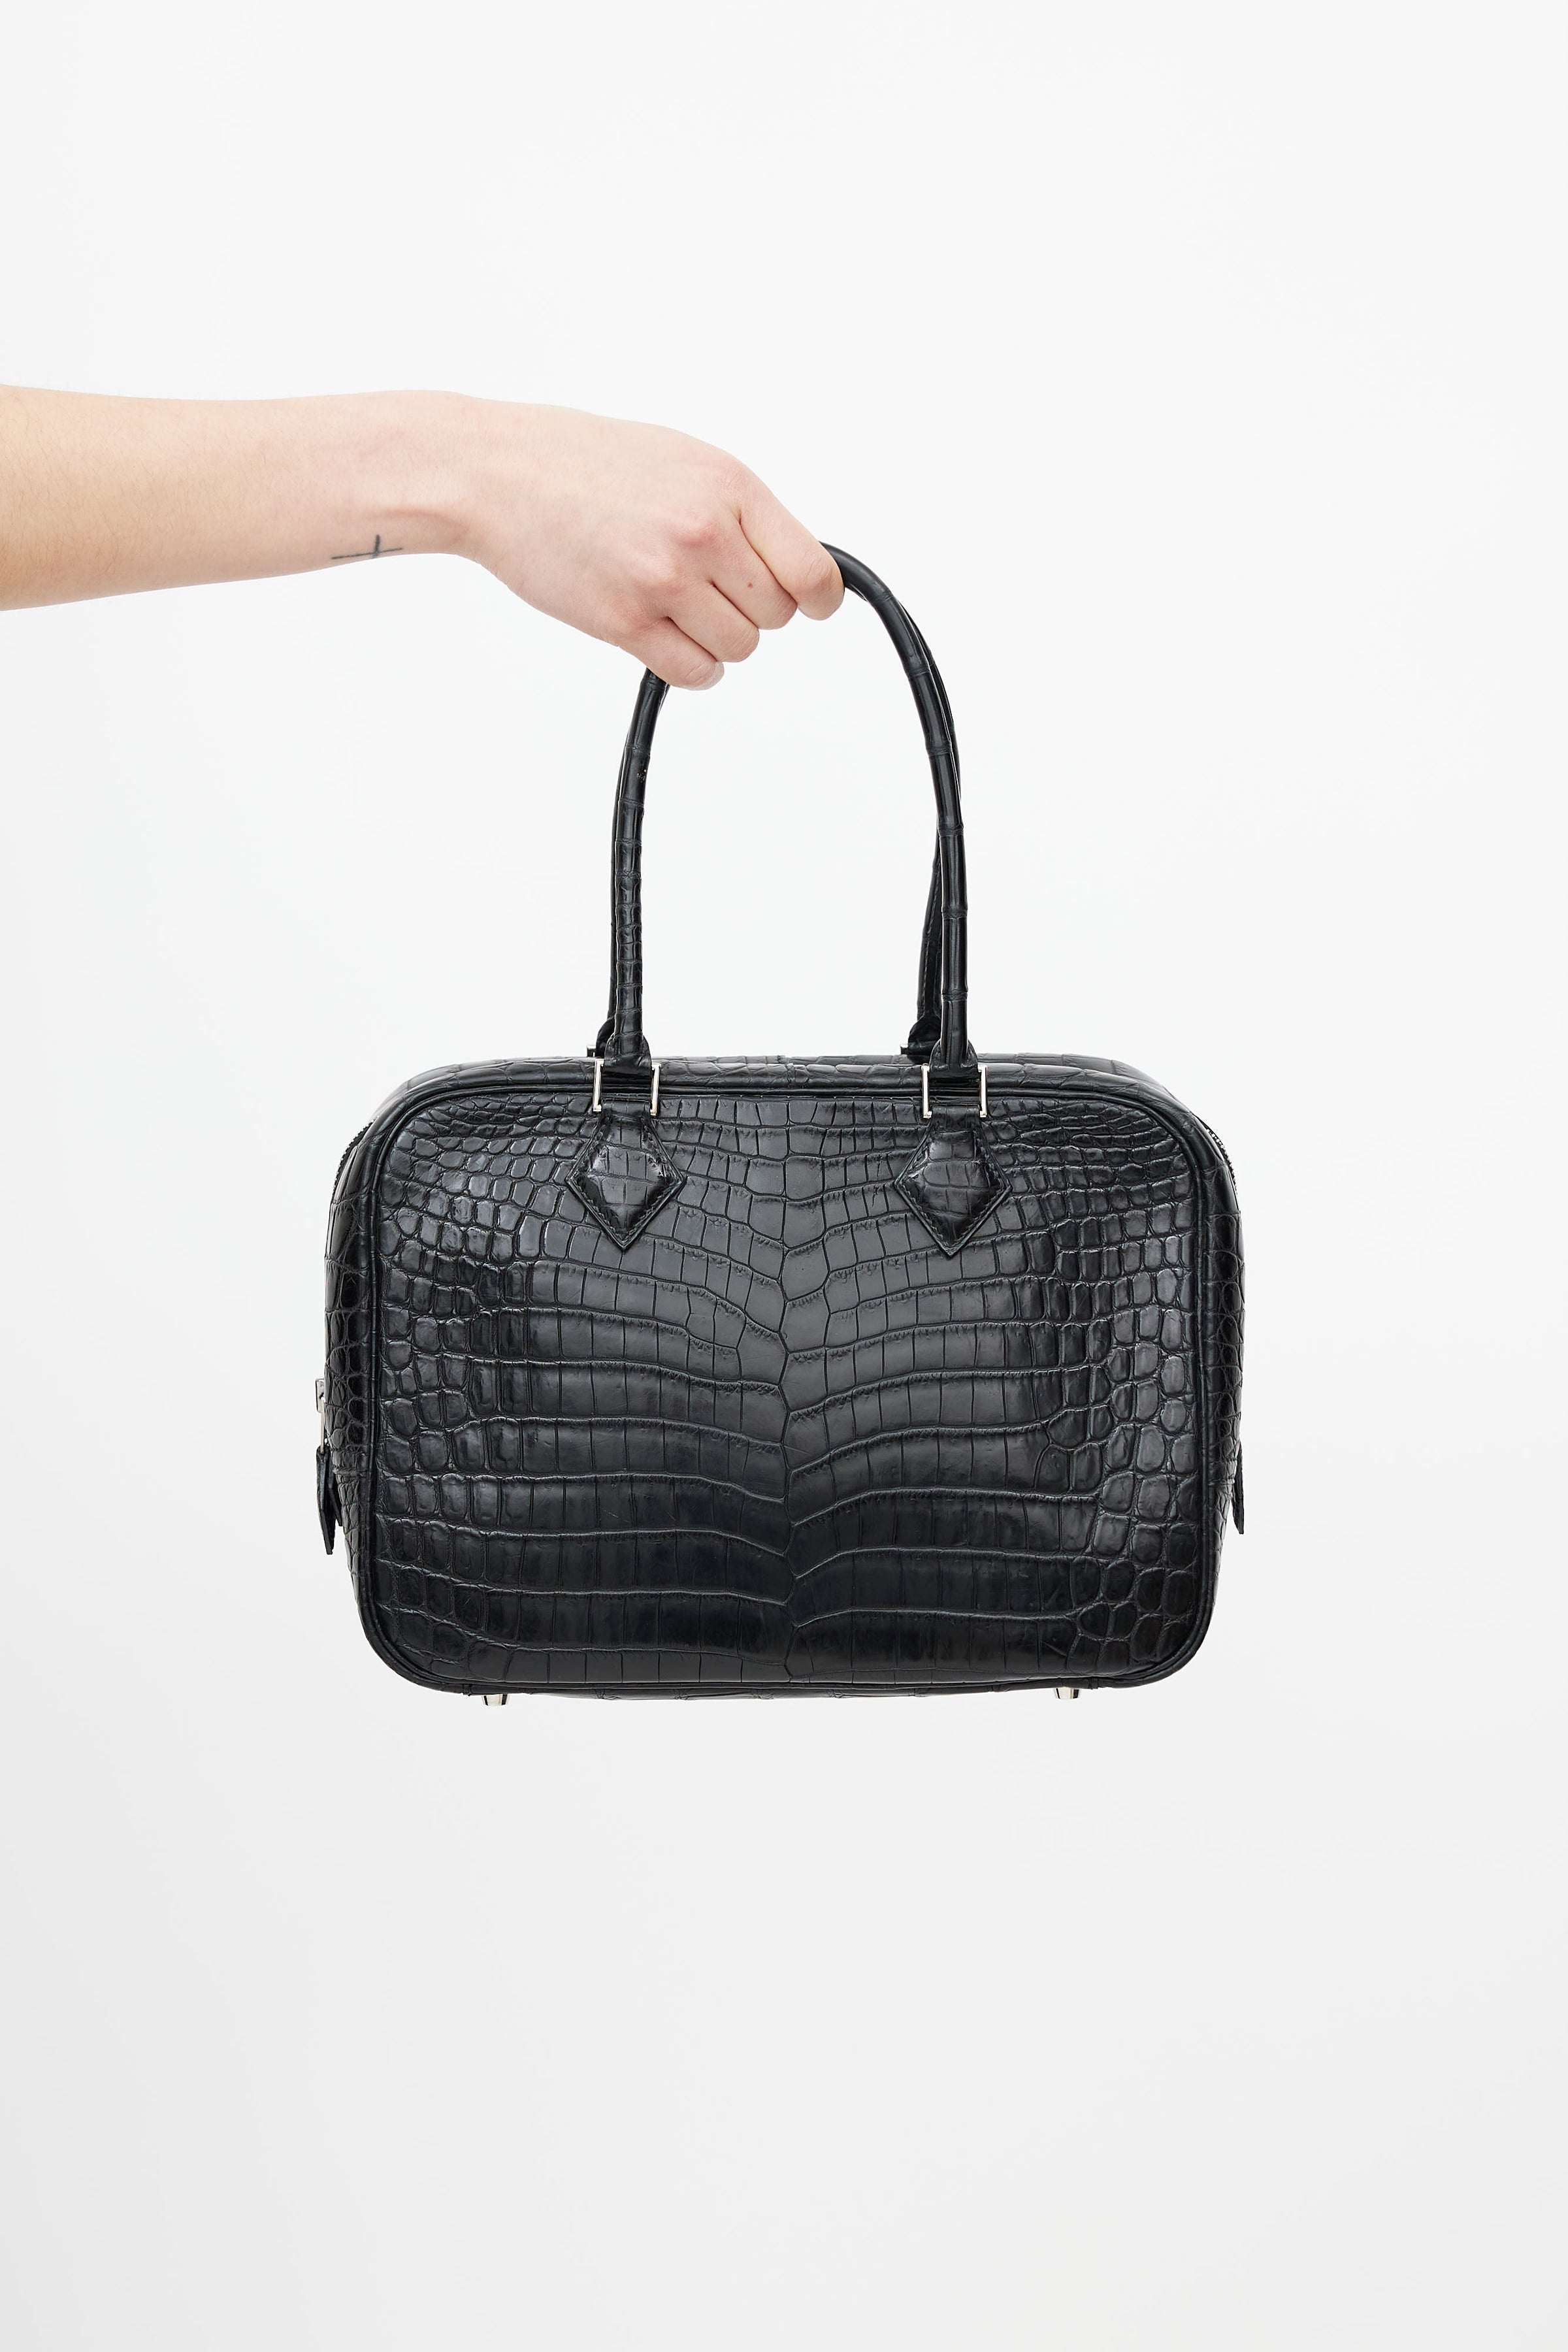 Hermès Plume Mini in Noir Black Doblis & Suede with Diamond